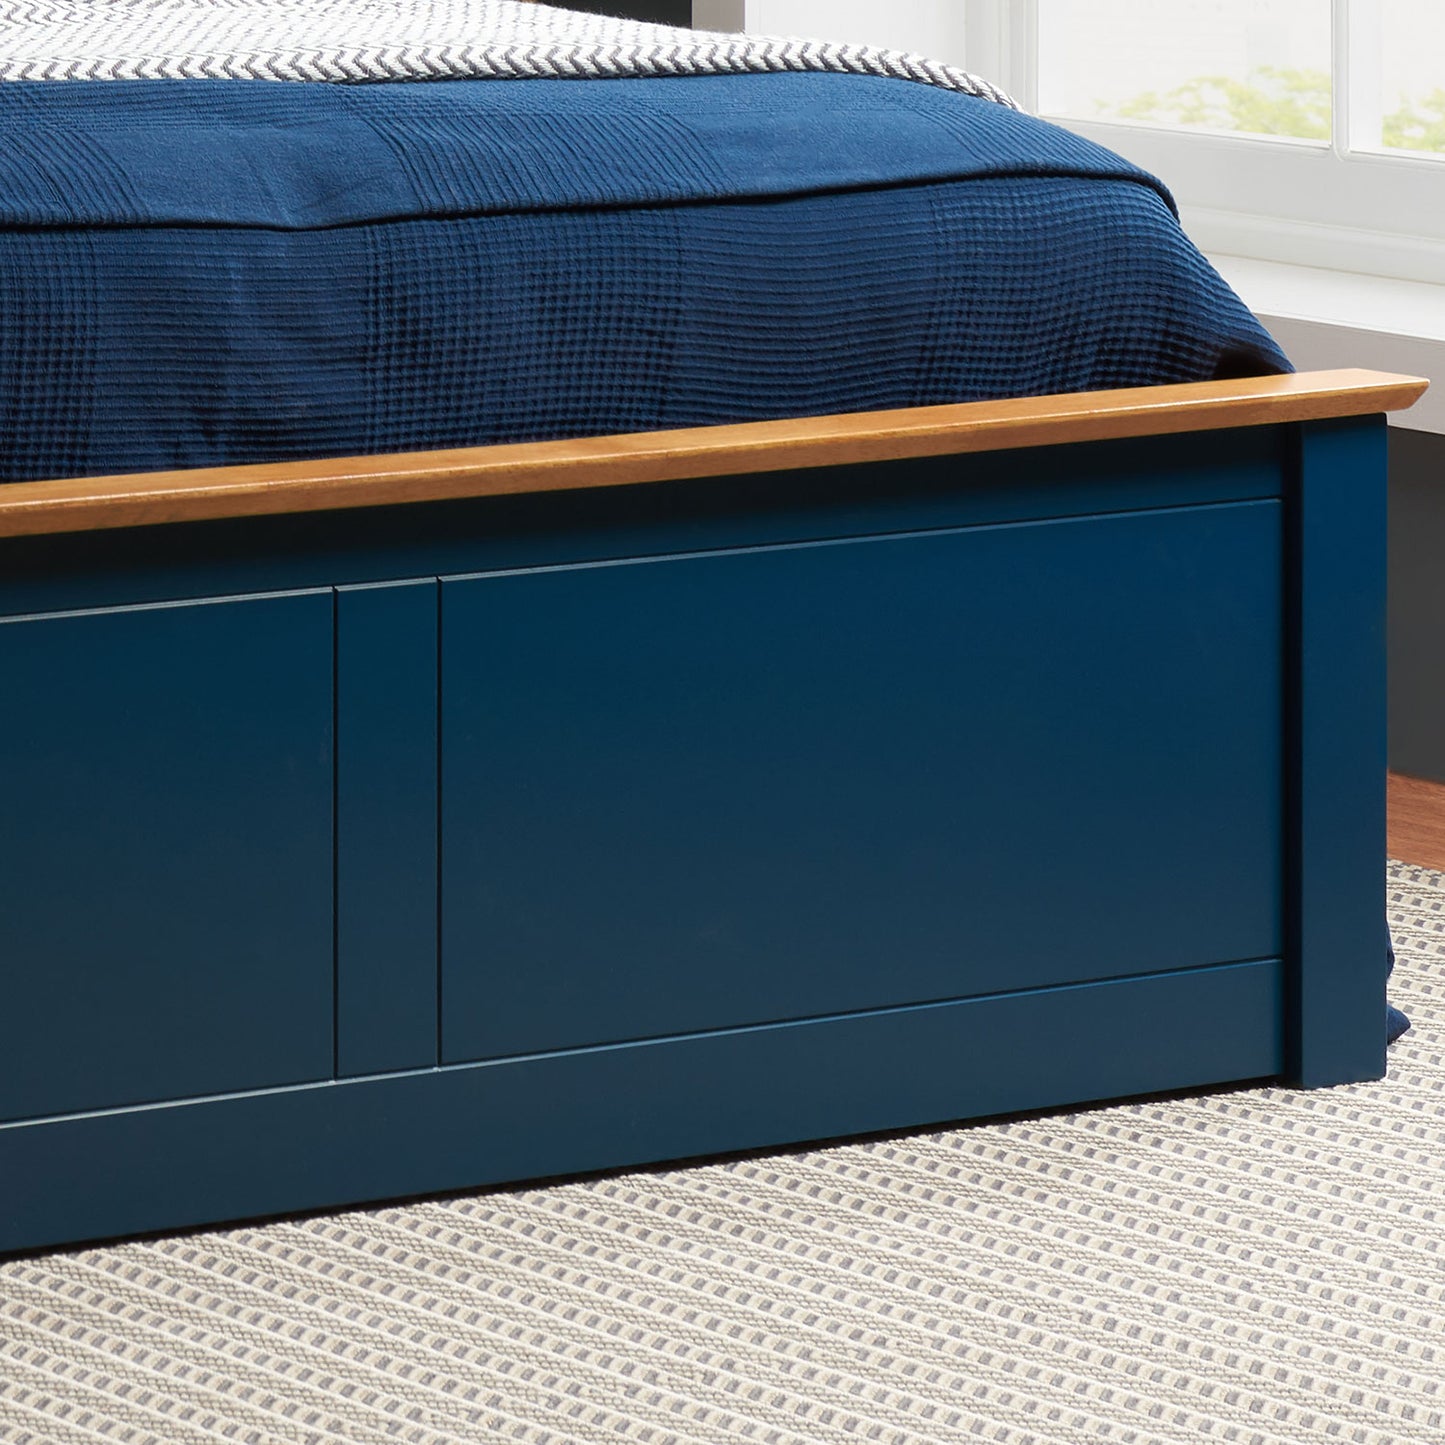 Phoenix Navy Blue Ottoman Bed